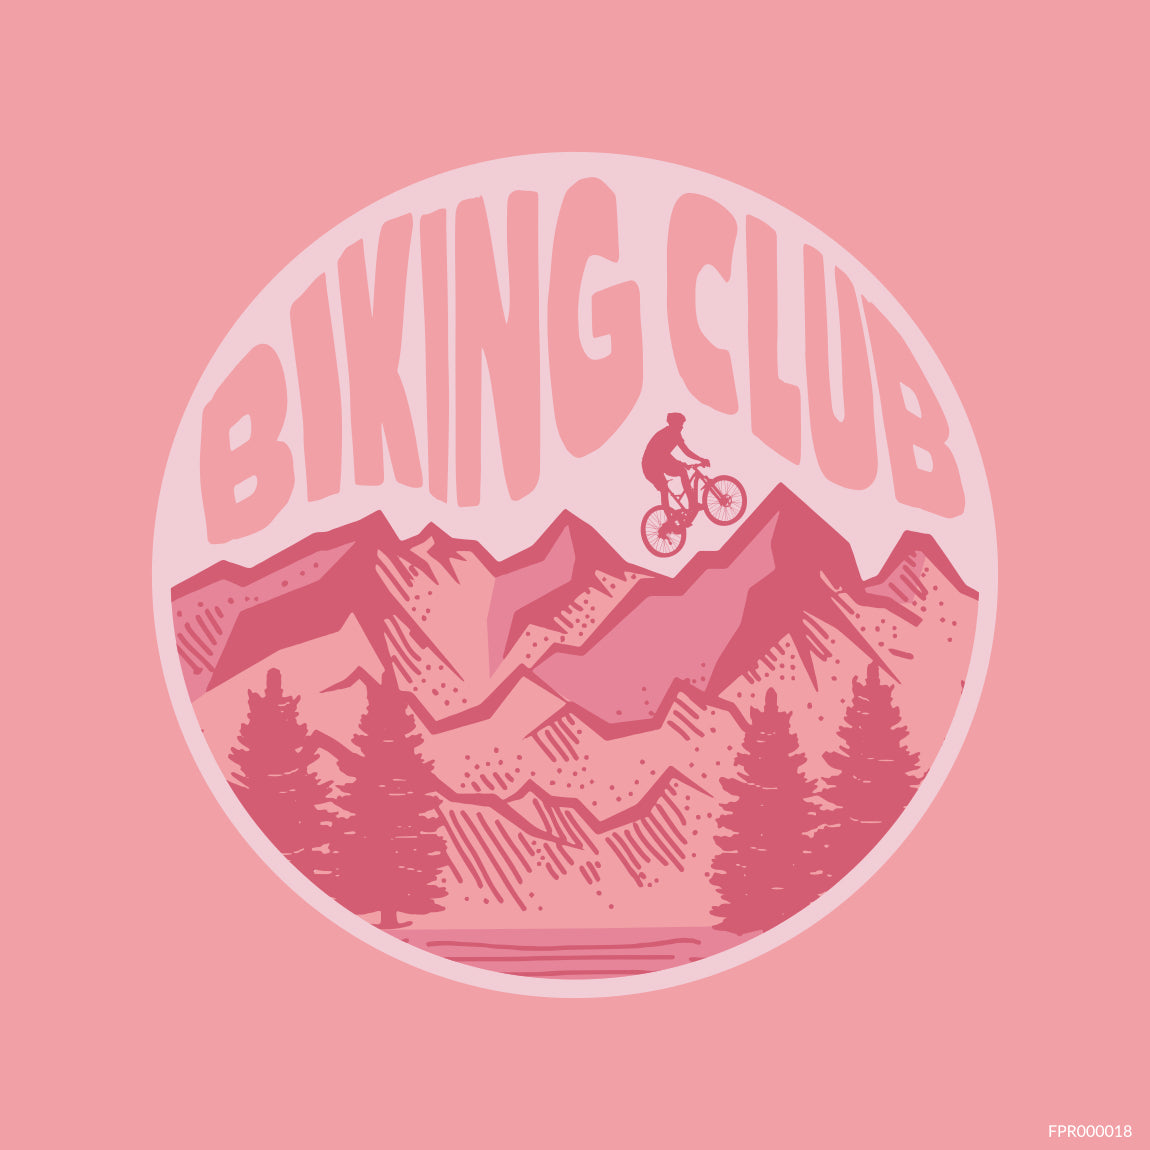 Biking Club